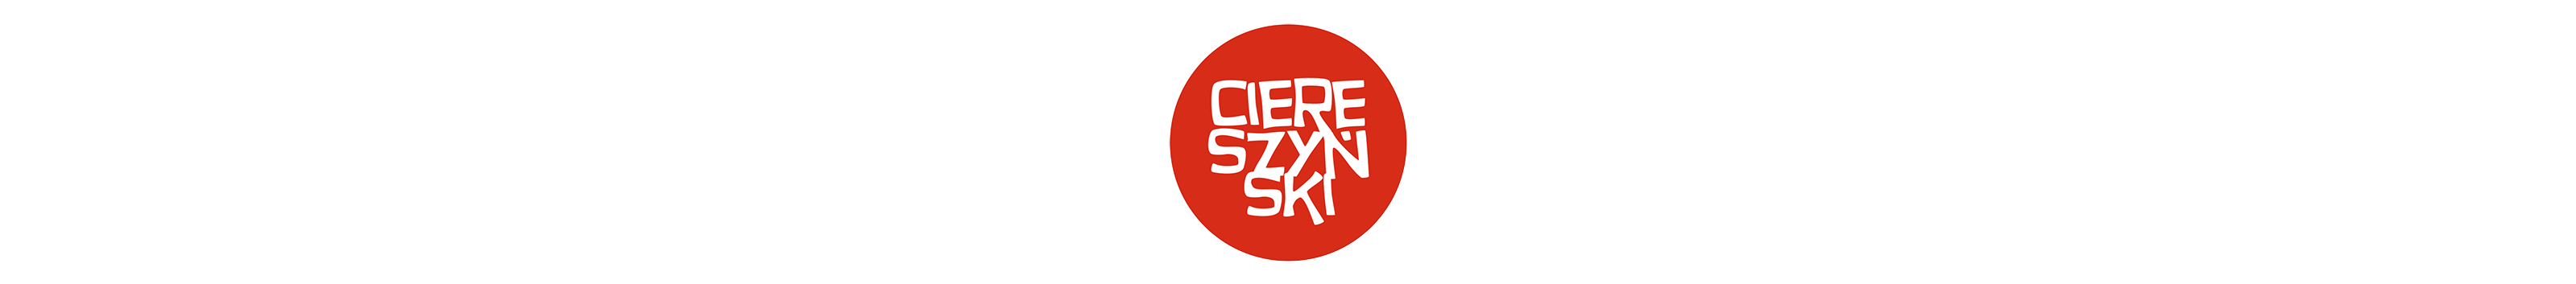 Piotr Ciereszyński's profile banner